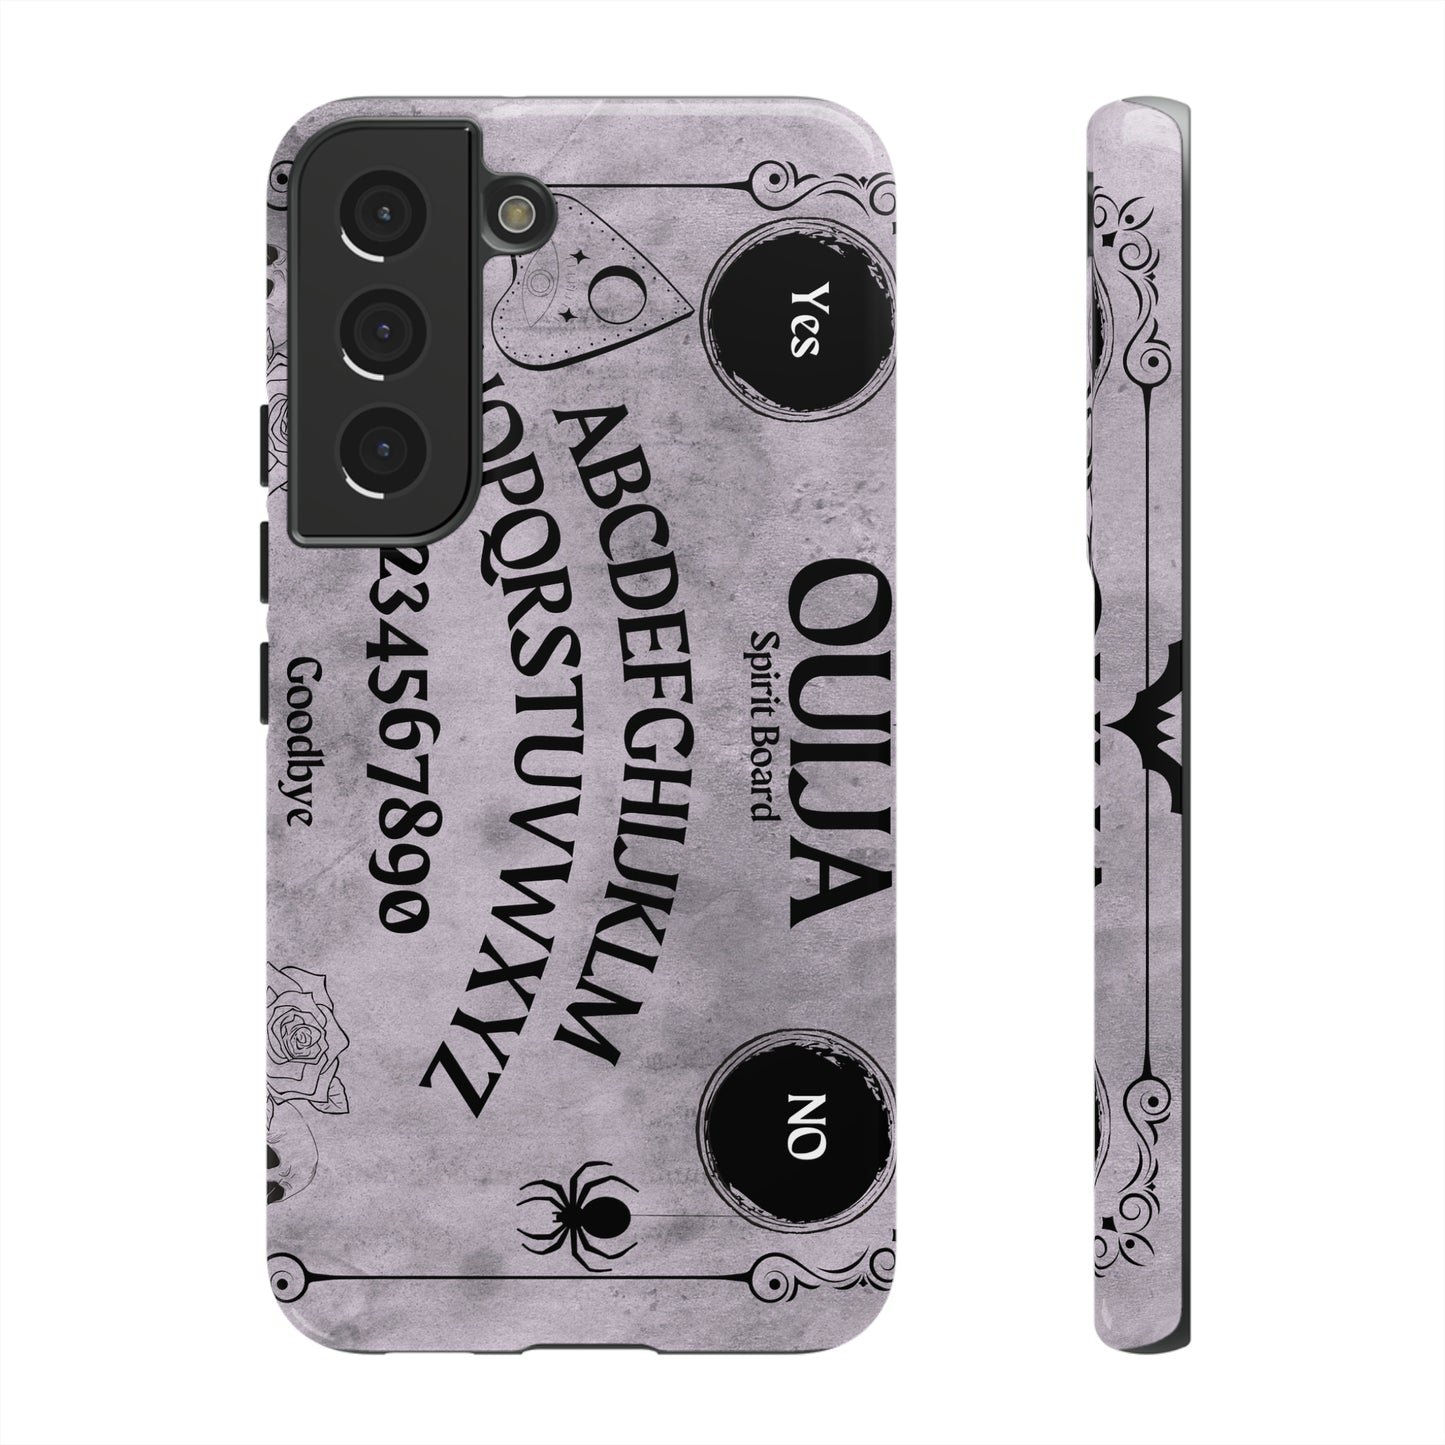 Ouija Board Tough Phone Cases For Samsung iPhone GooglePhone CaseVTZdesignsSamsung Galaxy S22GlossyAccessoriesGlossyhalloween